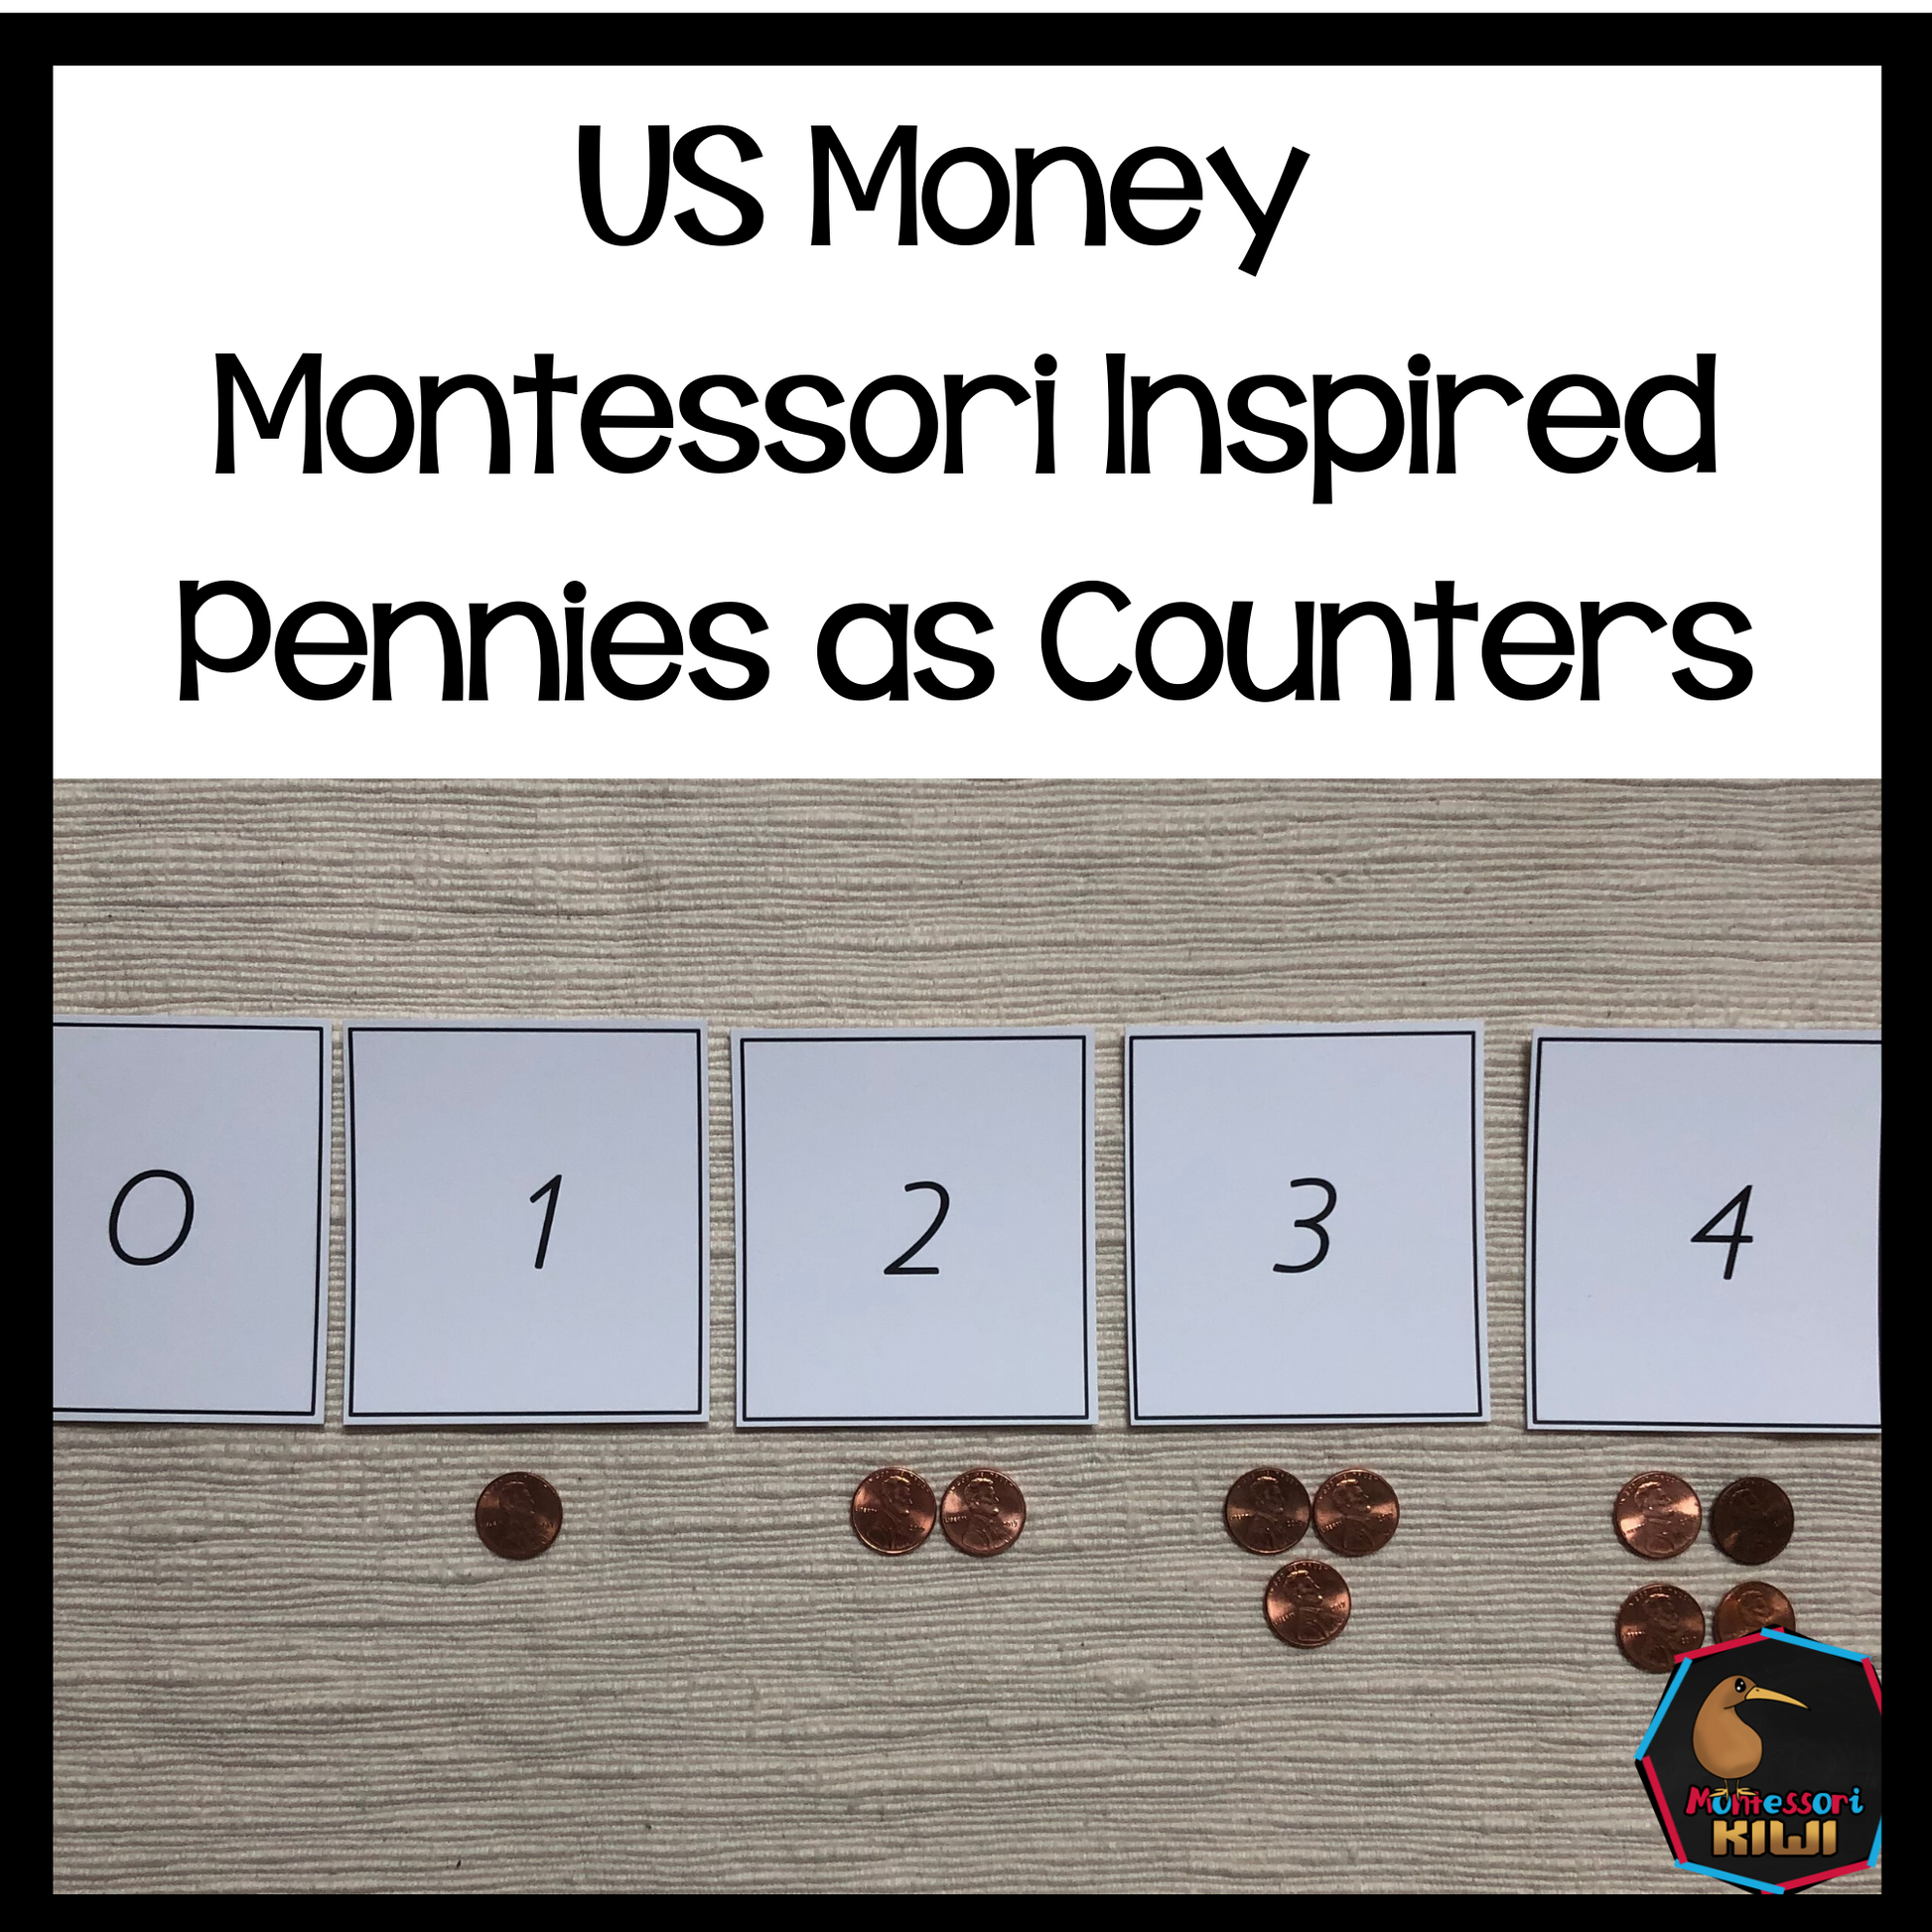 US Money Montessori Inspired Pennies as Counters - montessorikiwi